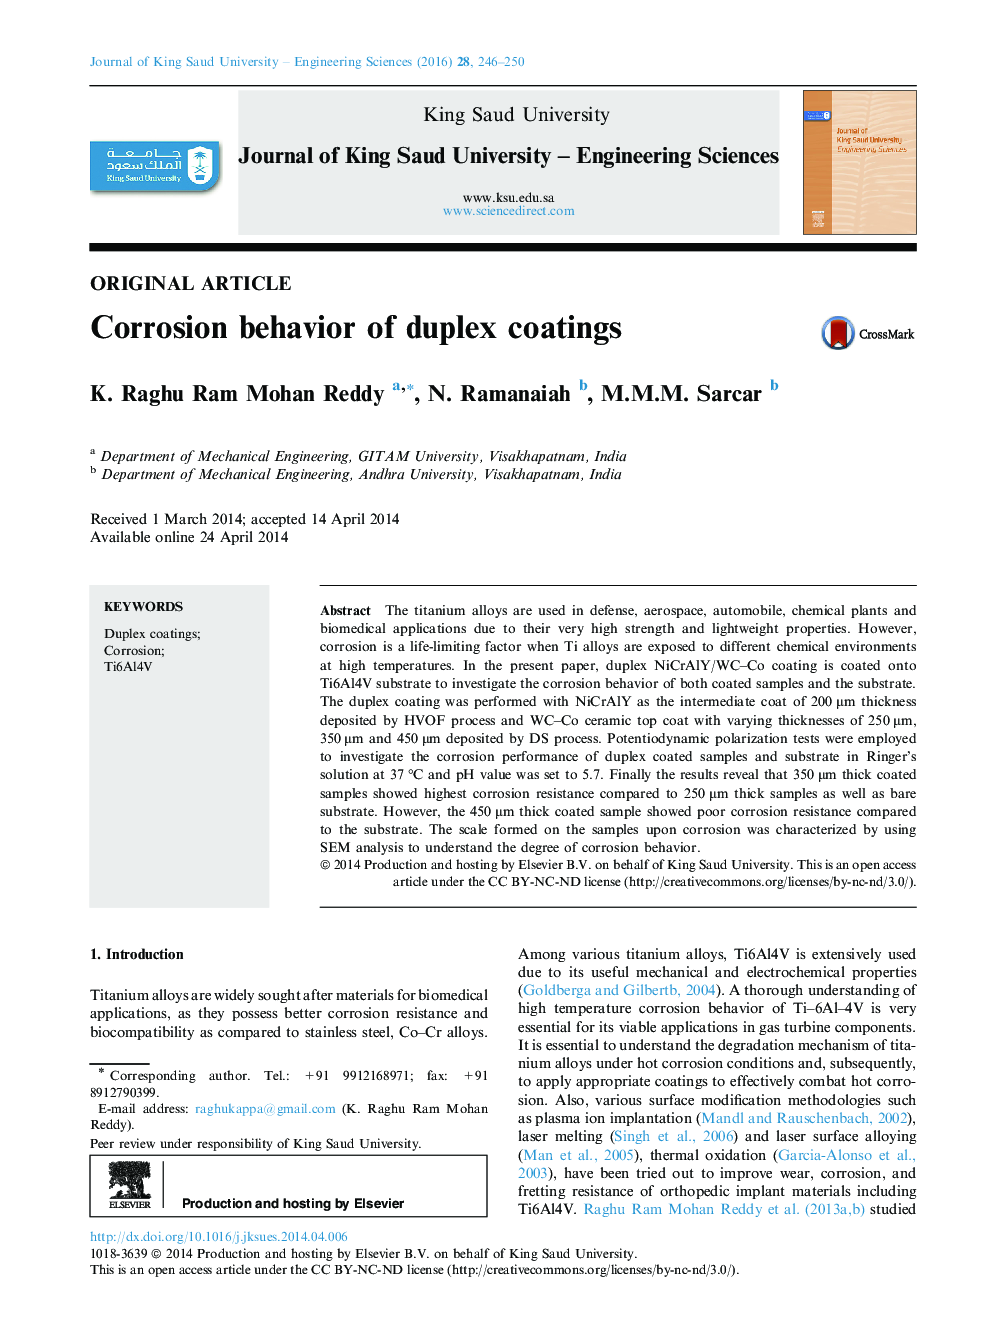 Corrosion behavior of duplex coatings 